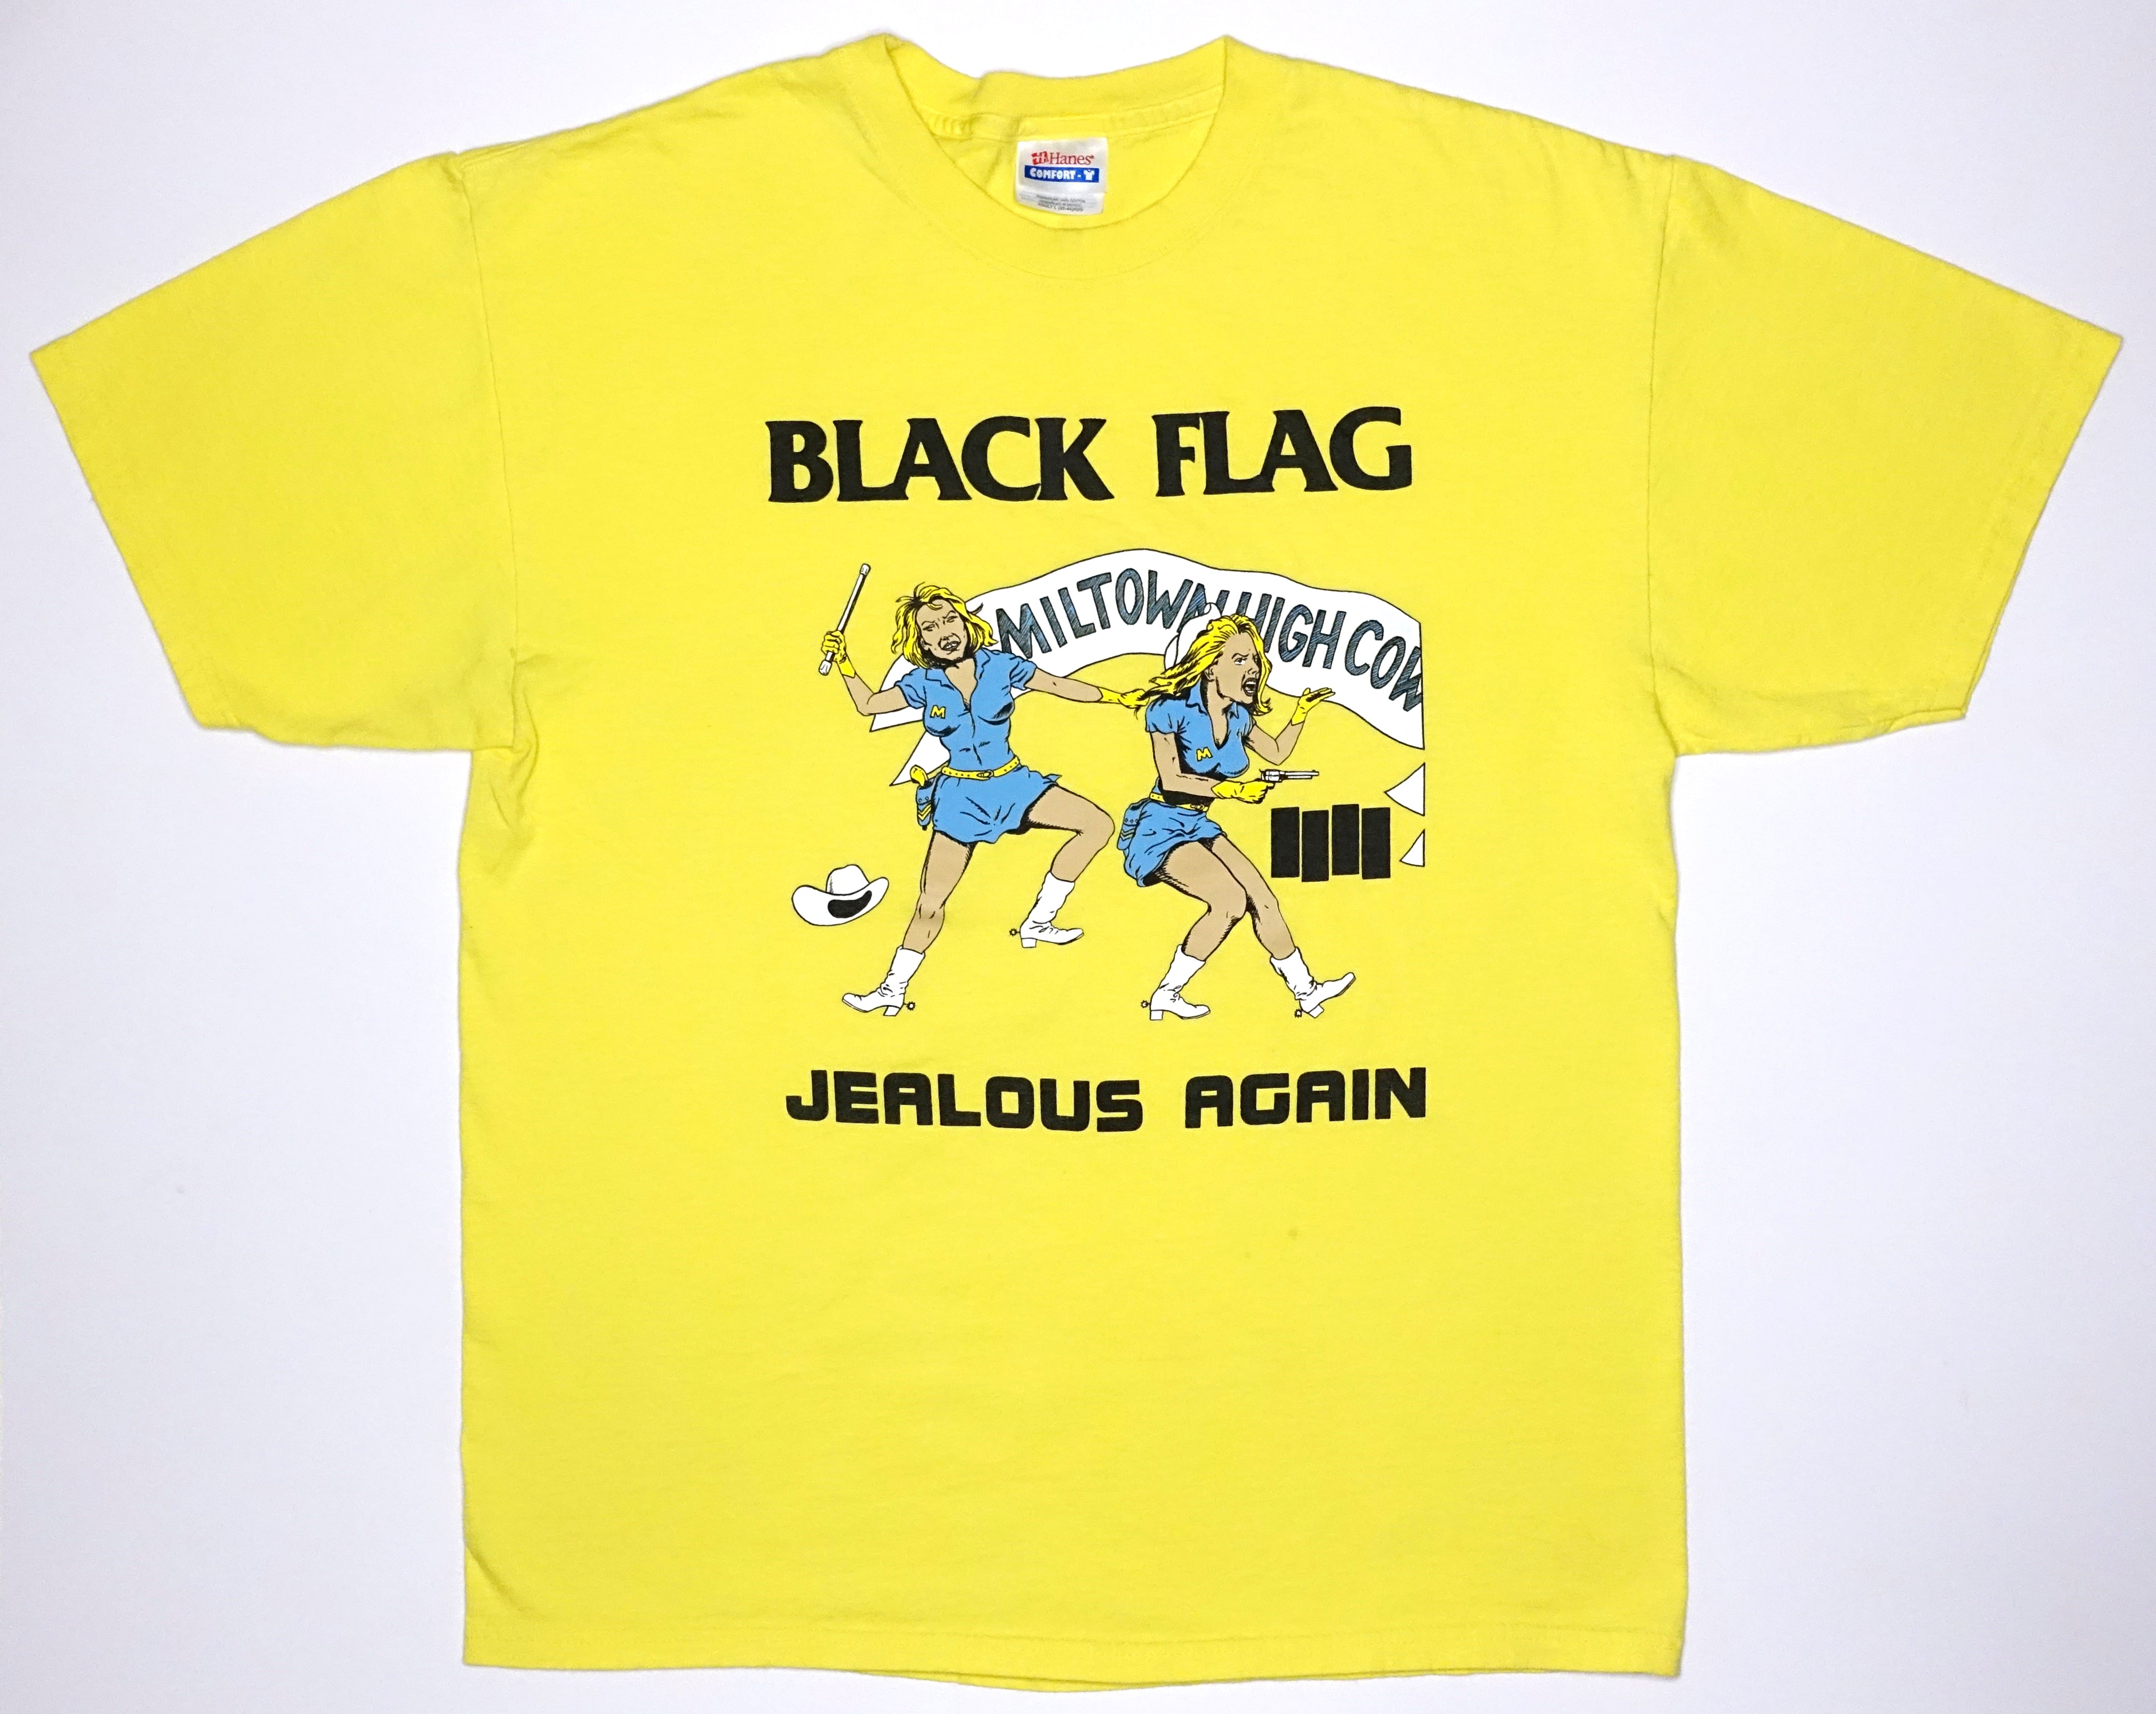 Black Flag - Jealous Again Tour Shirt Size Large Yellow